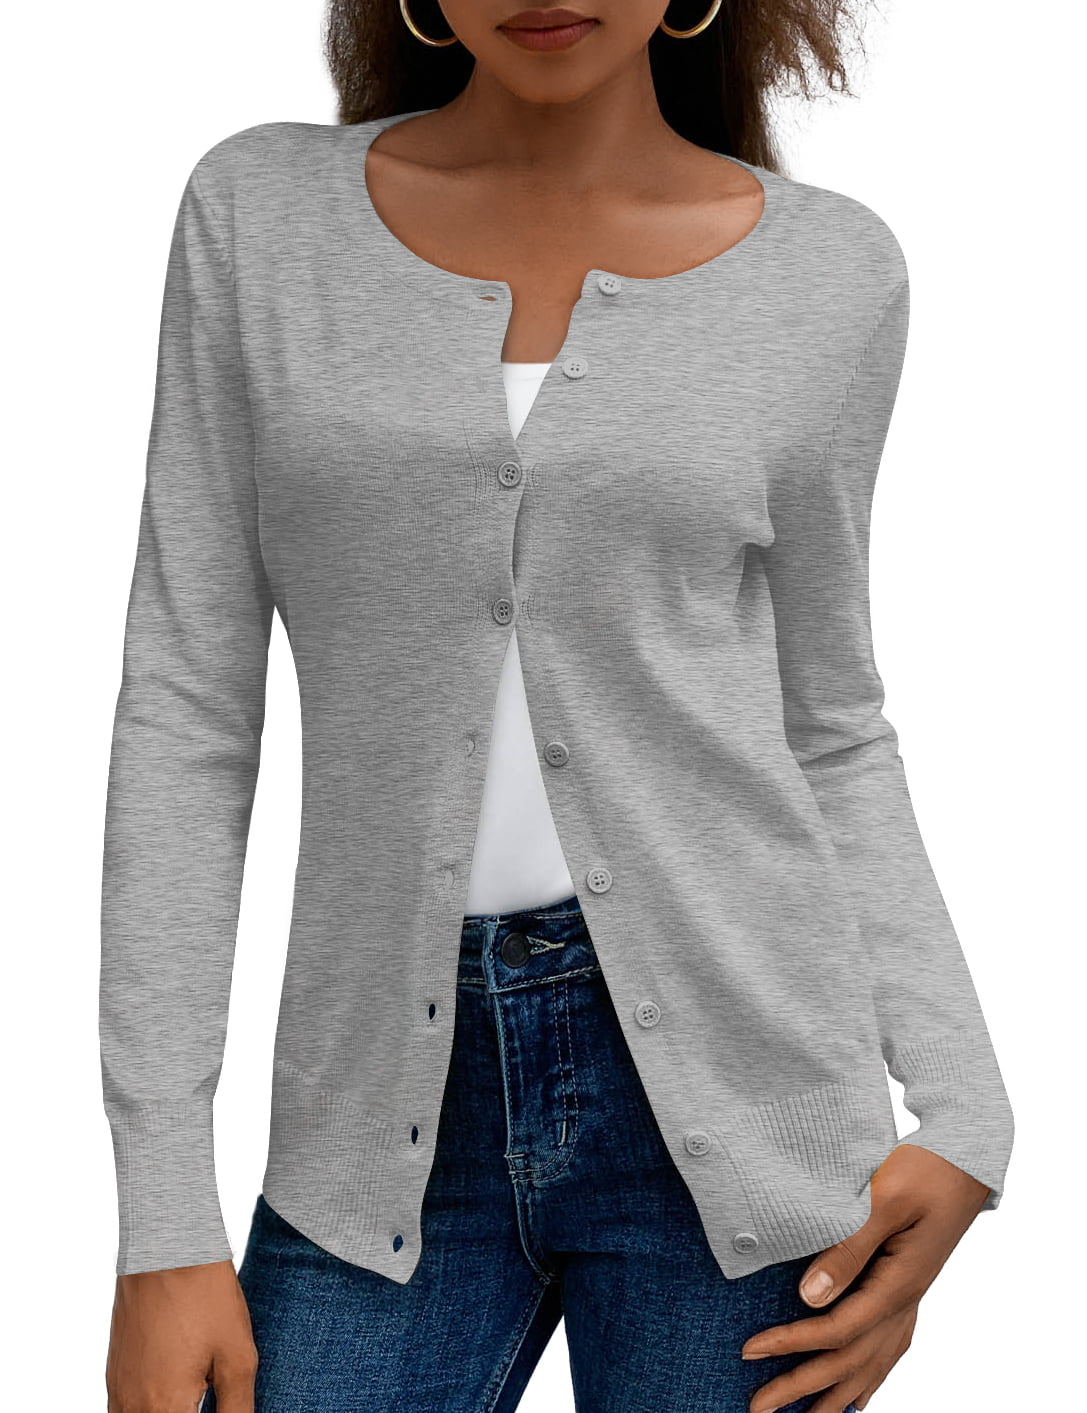 QUALFORT Women's 100% Cotton Cardigan Sweater Long Sleeve Button